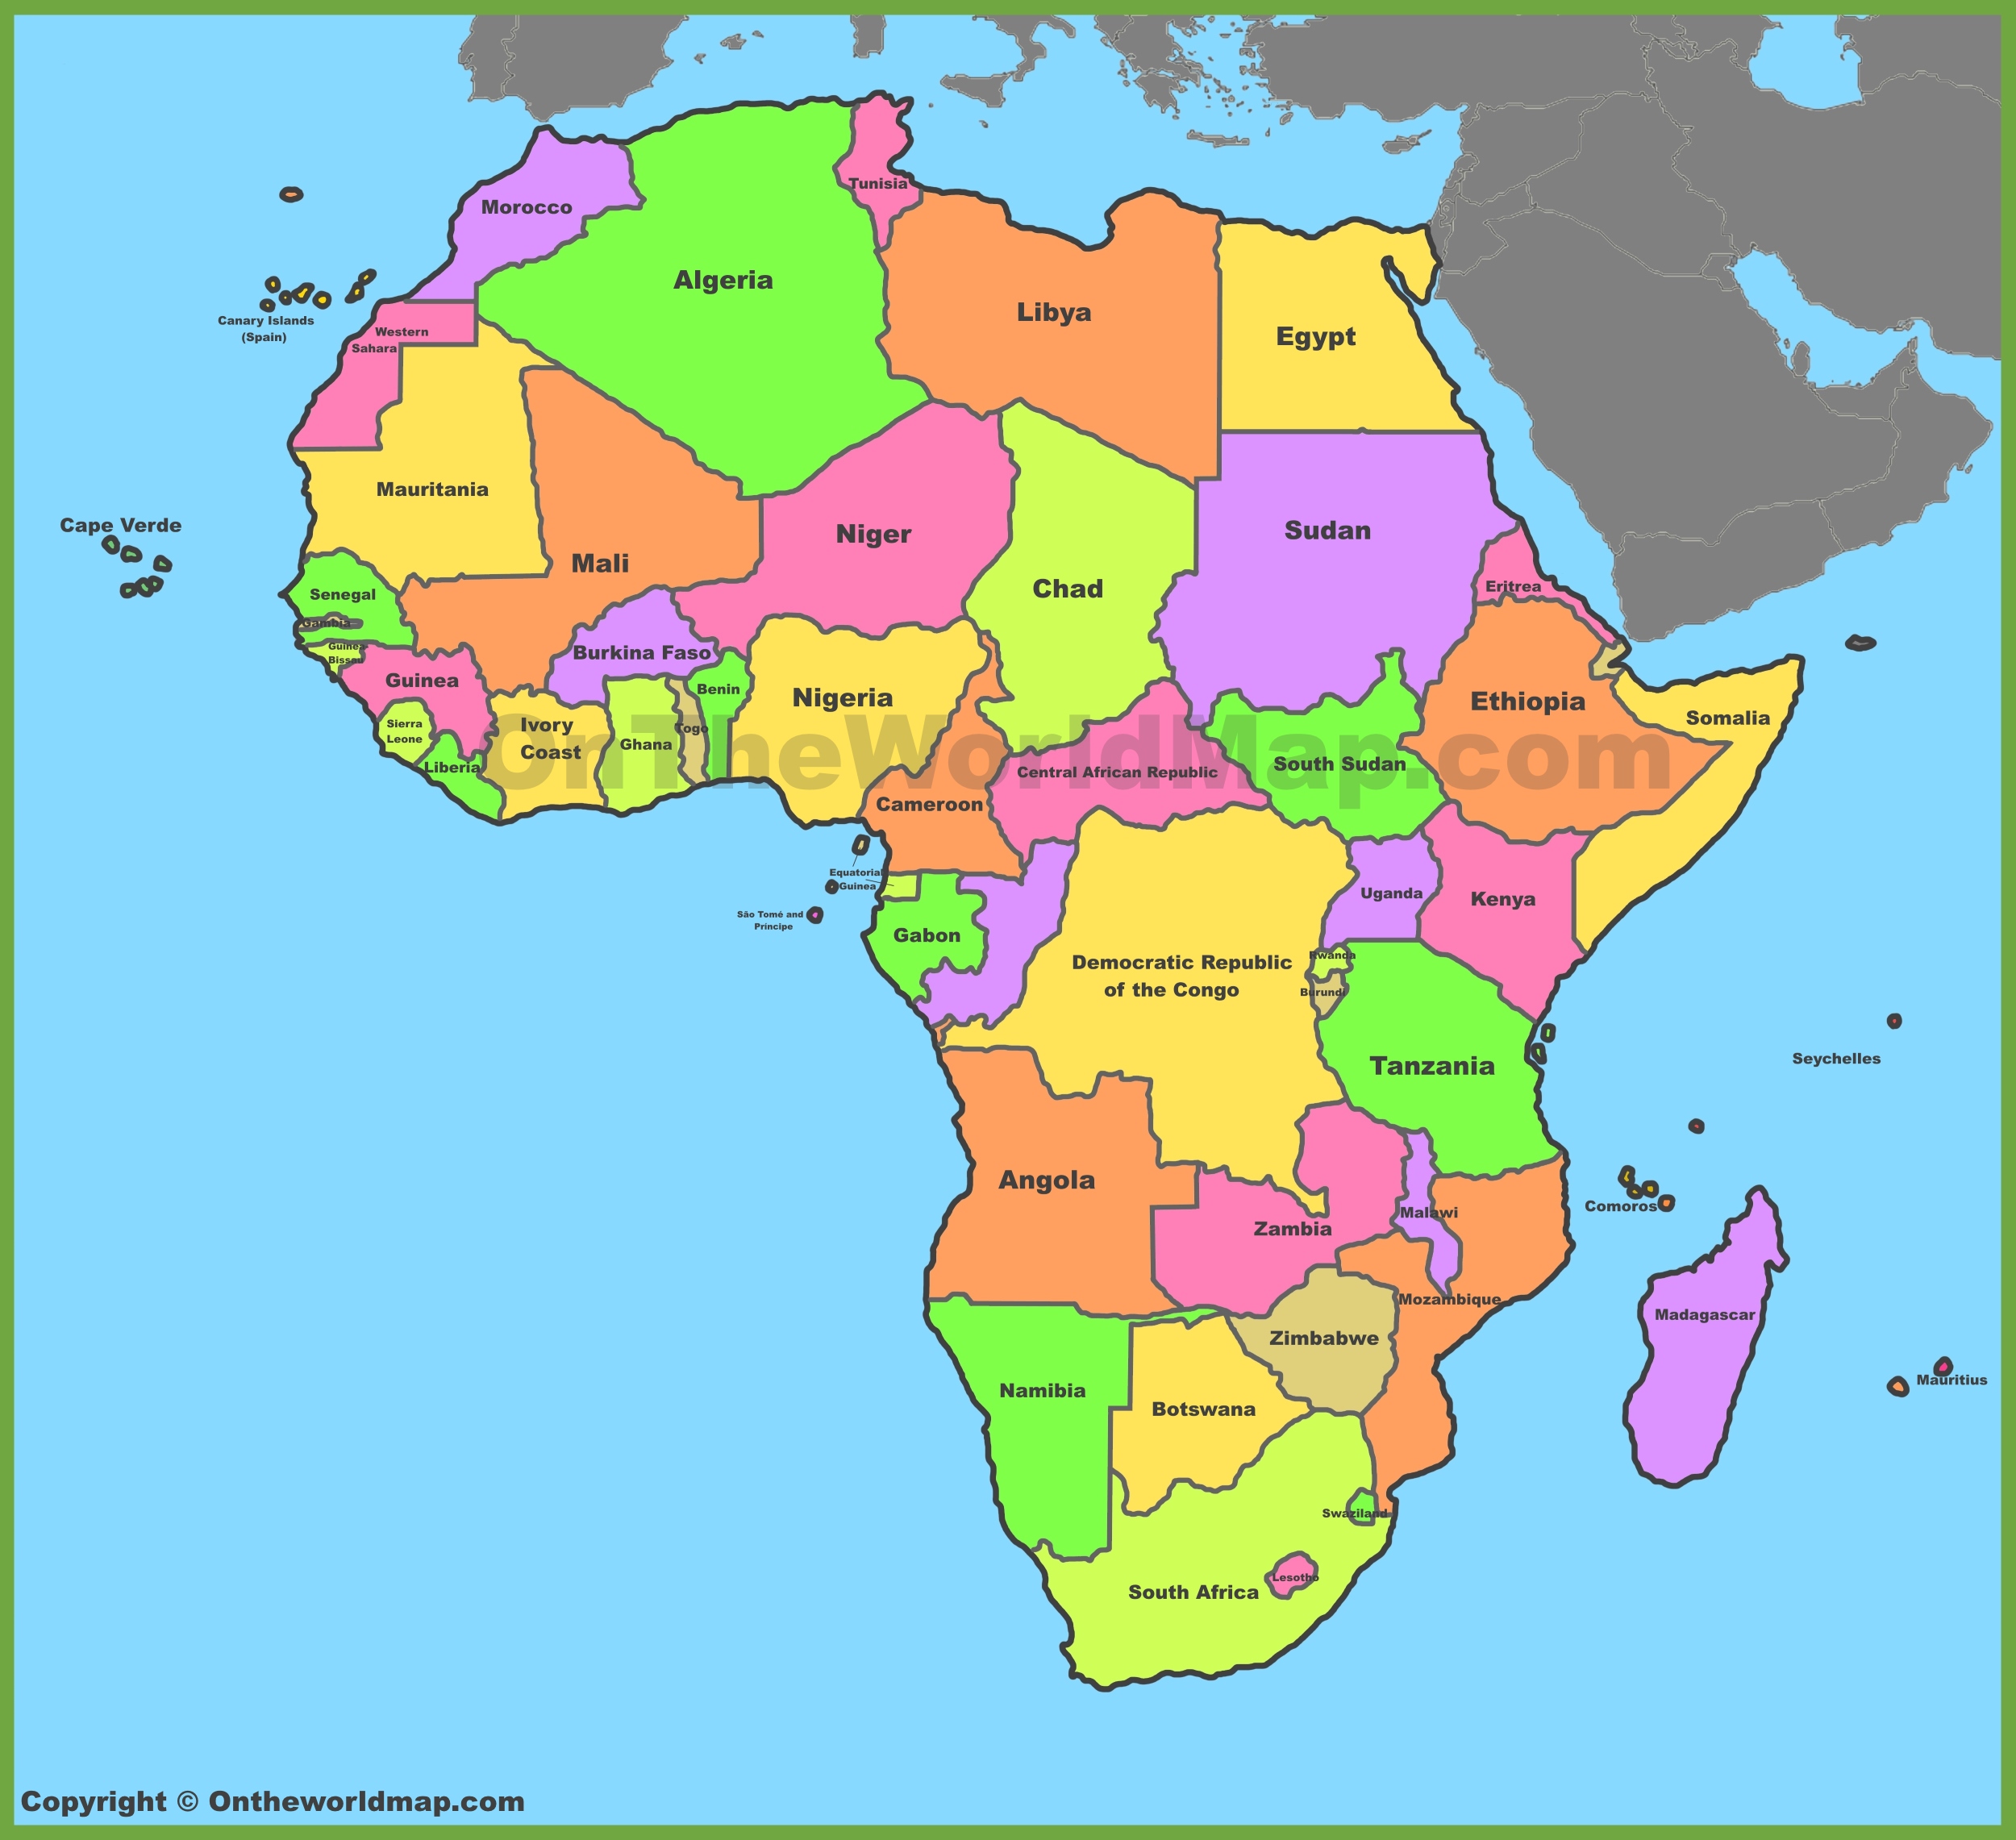 Africa Maps | Maps of Africa - OnTheWorldMap.com ﻿